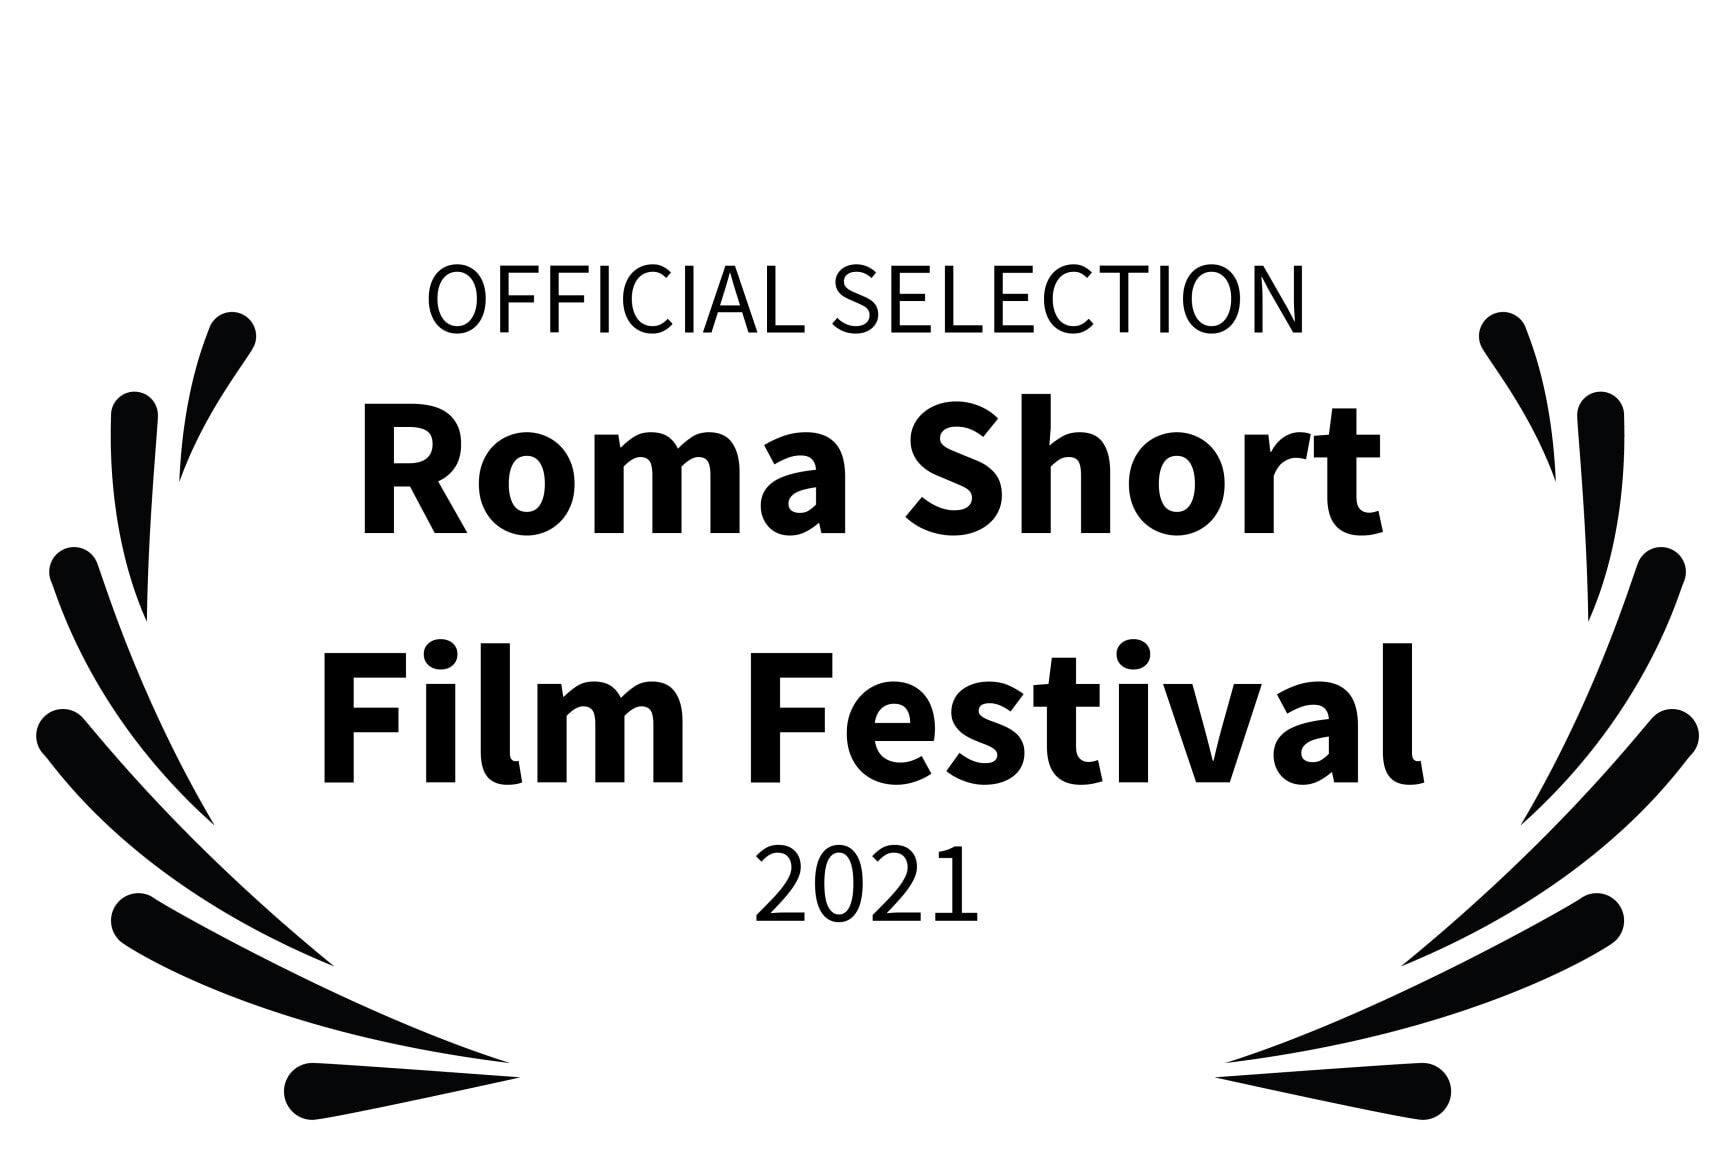 OFFICIAL SELECTION - Roma Short Film Festival - 2021